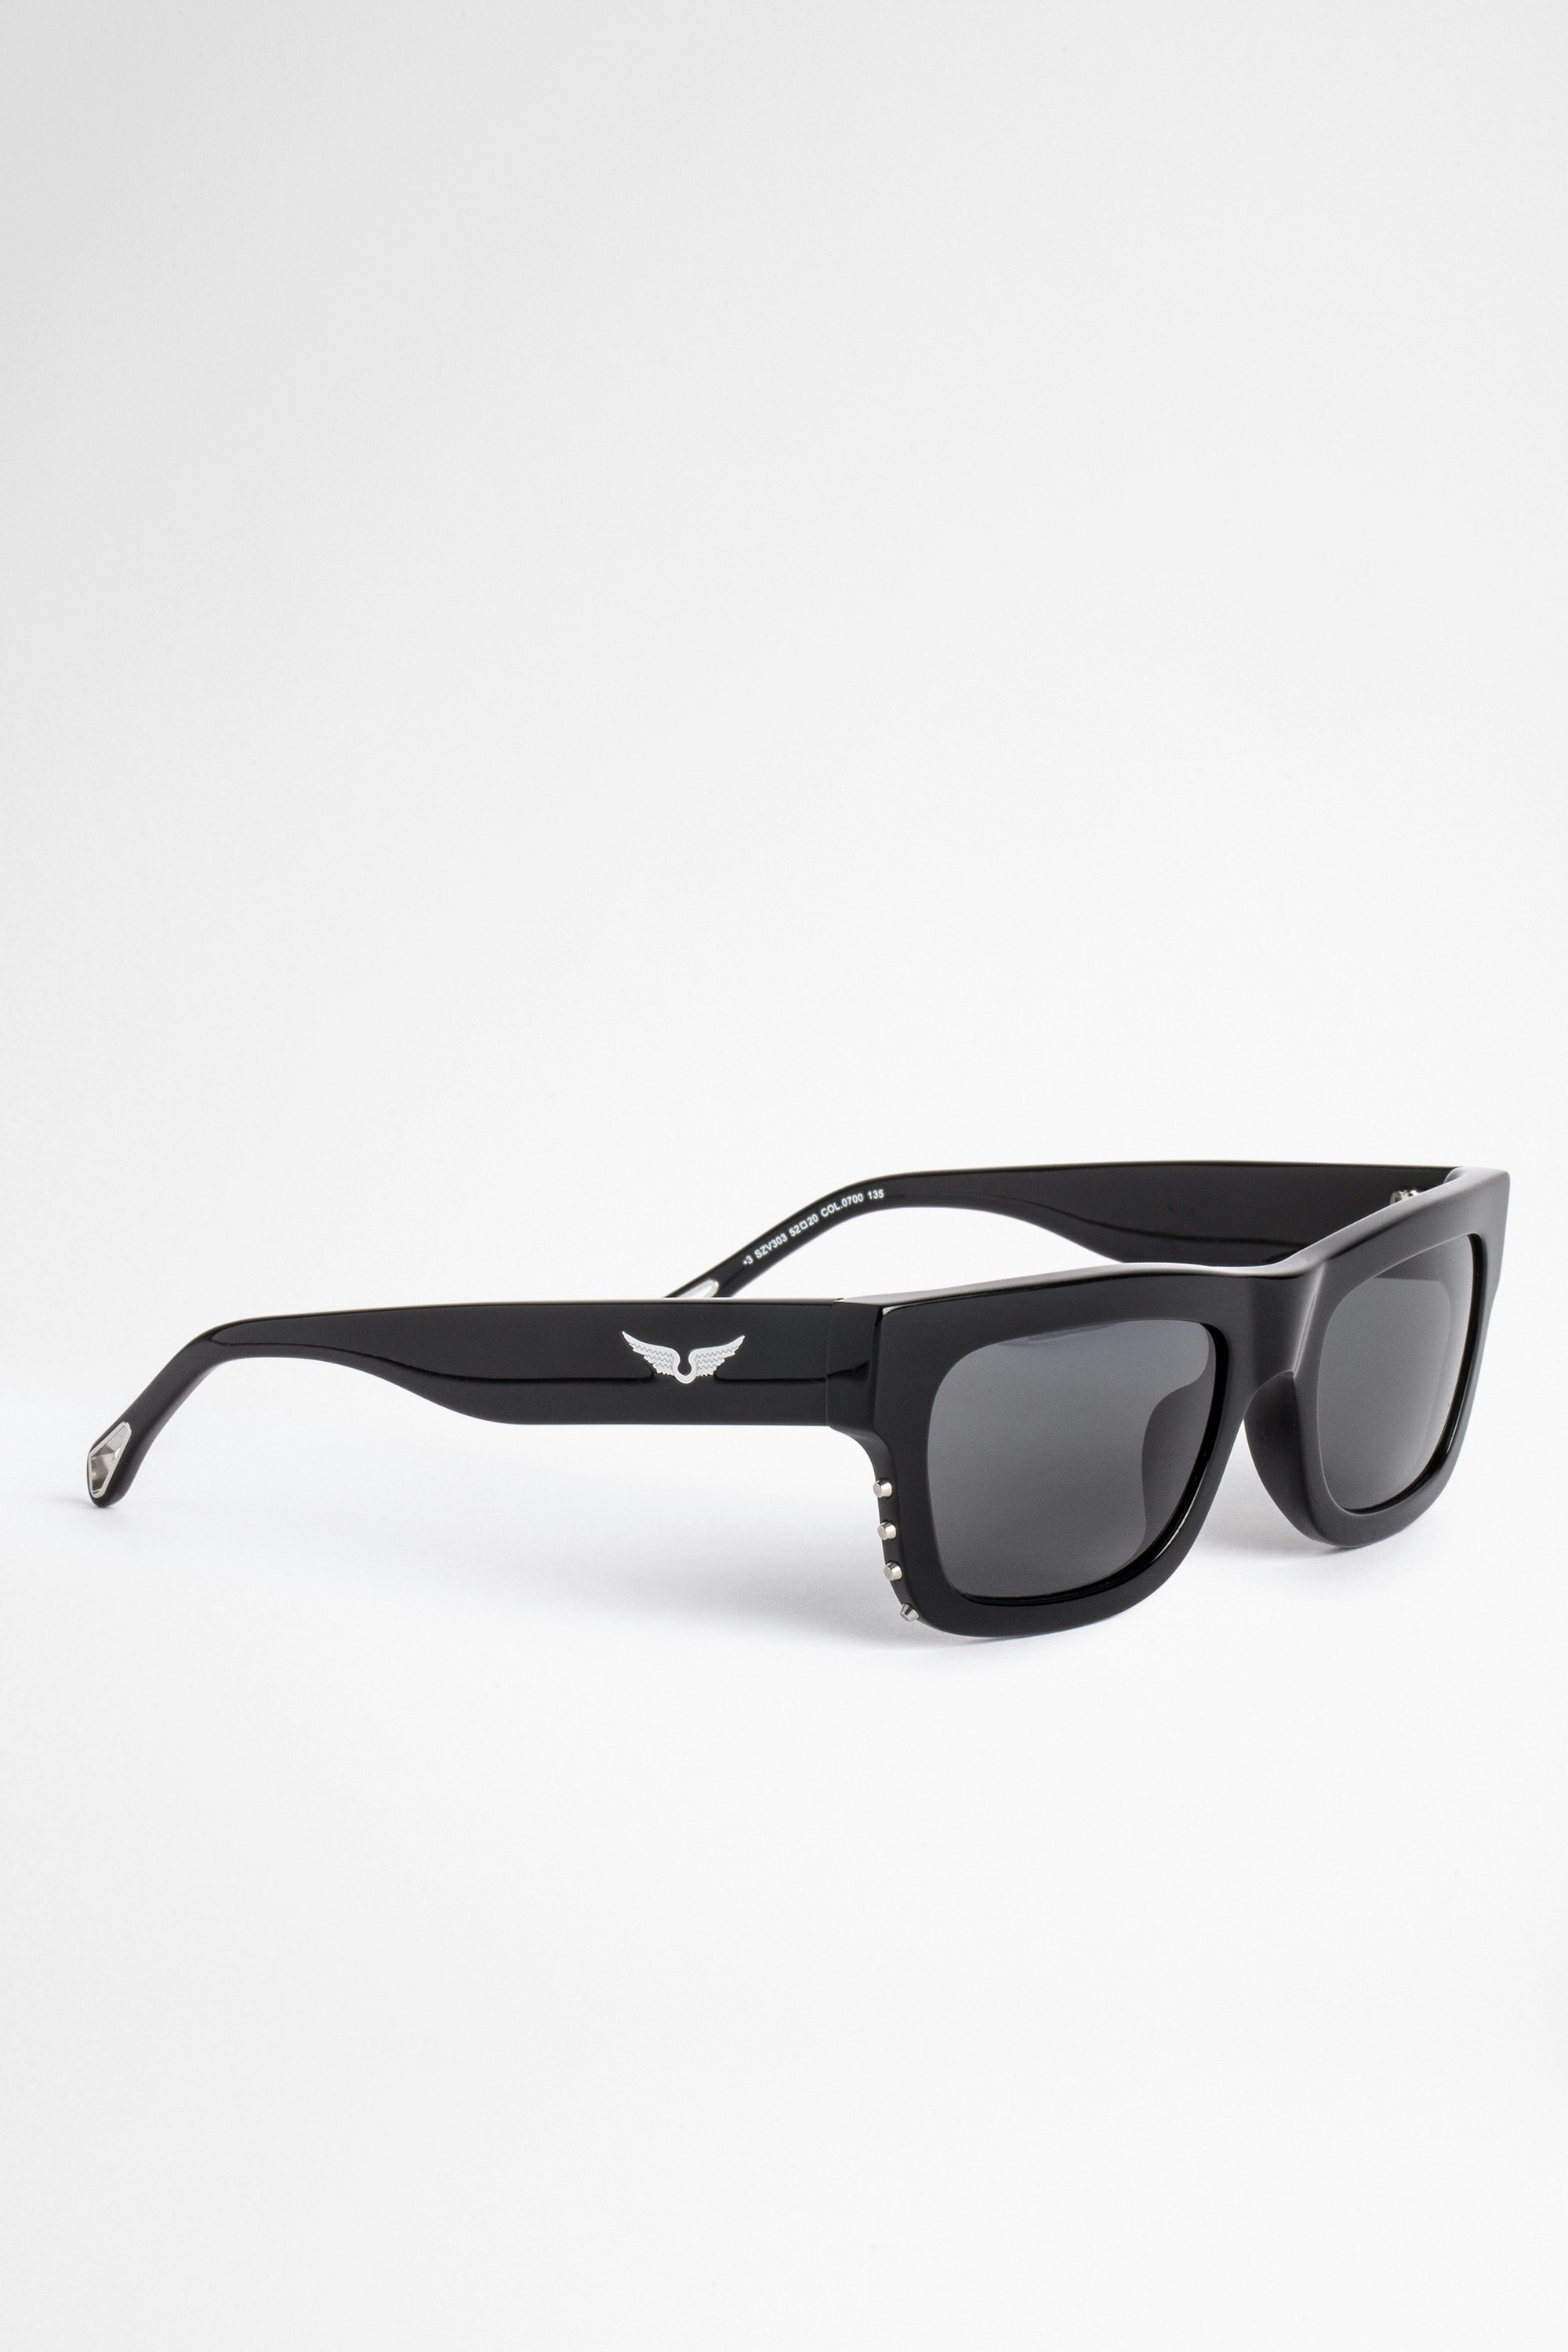 Occhiali Shiny Unisex sunglasses Zadig&Volatire black acetate decorated with small metal studs.